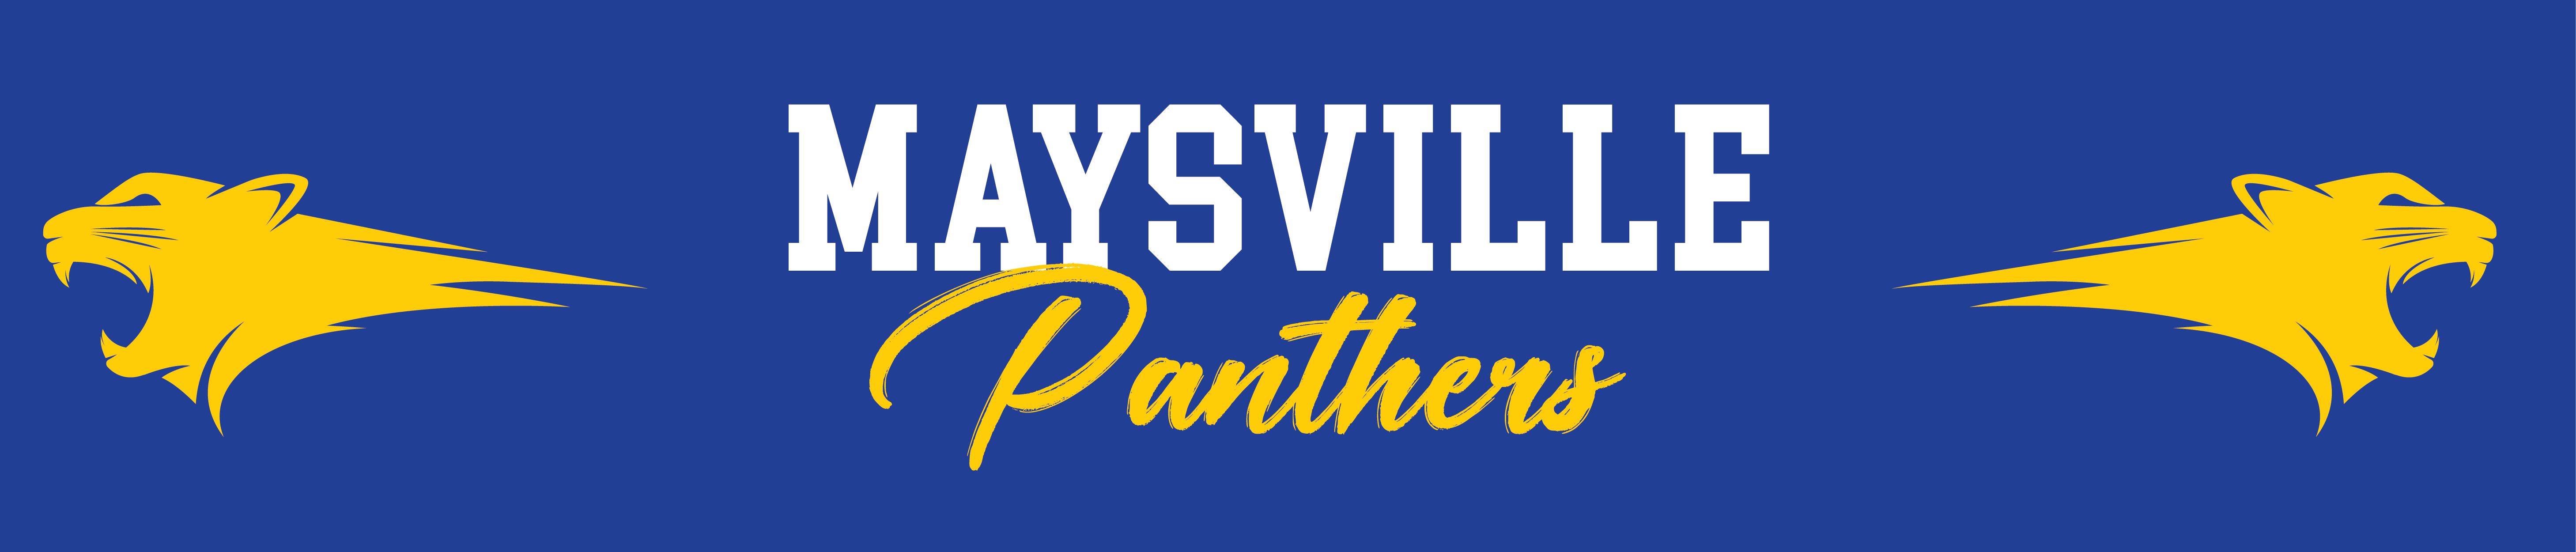 Maysville Panthers